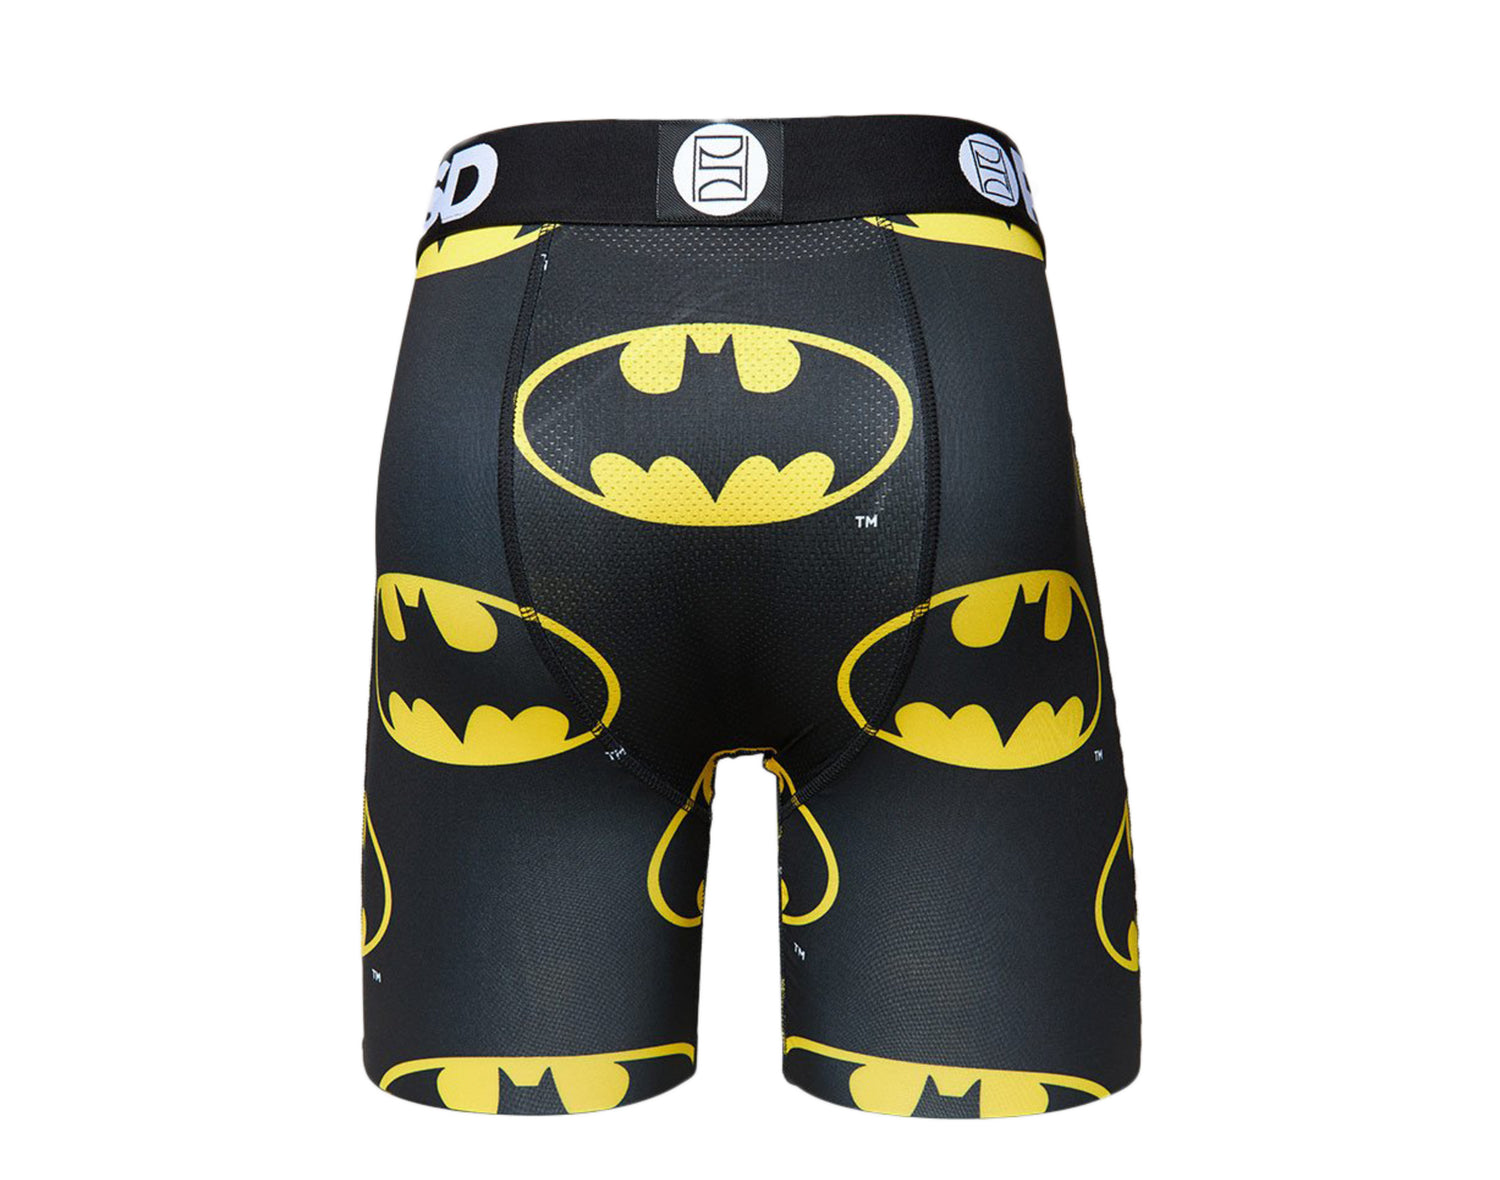 PSD DC - Batman Boxer Briefs Men's Underwear